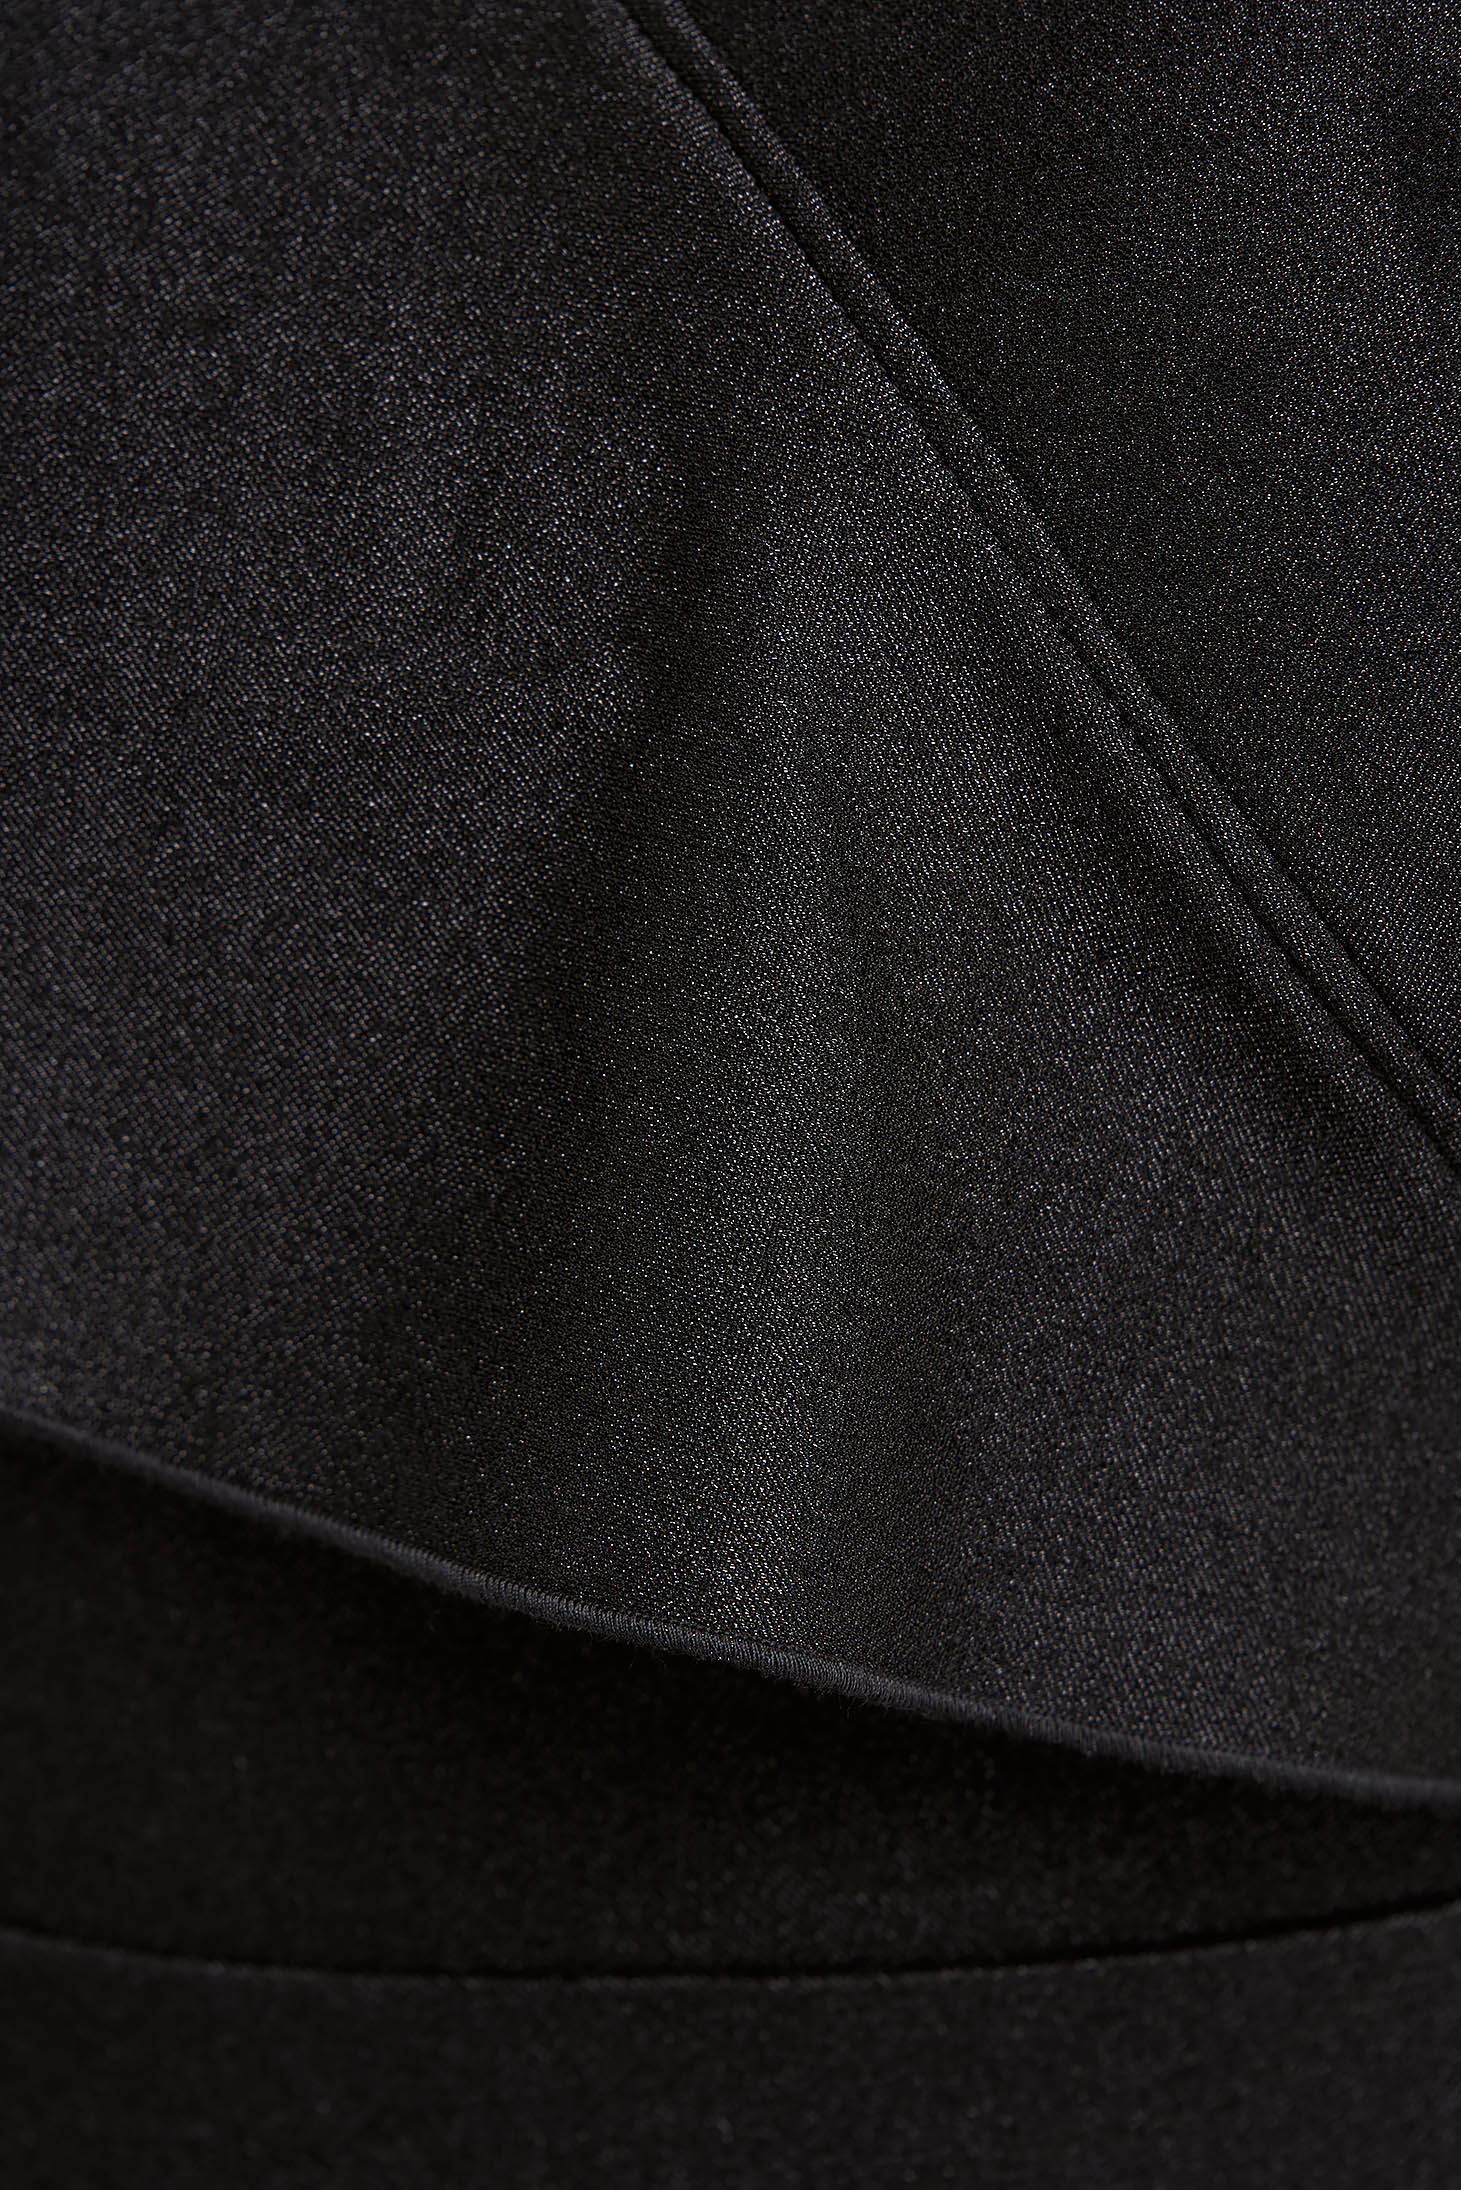 Rochie din material elastic neagra midi tip creion cu volanase pe linia decolteului - StarShinerS 5 - StarShinerS.ro